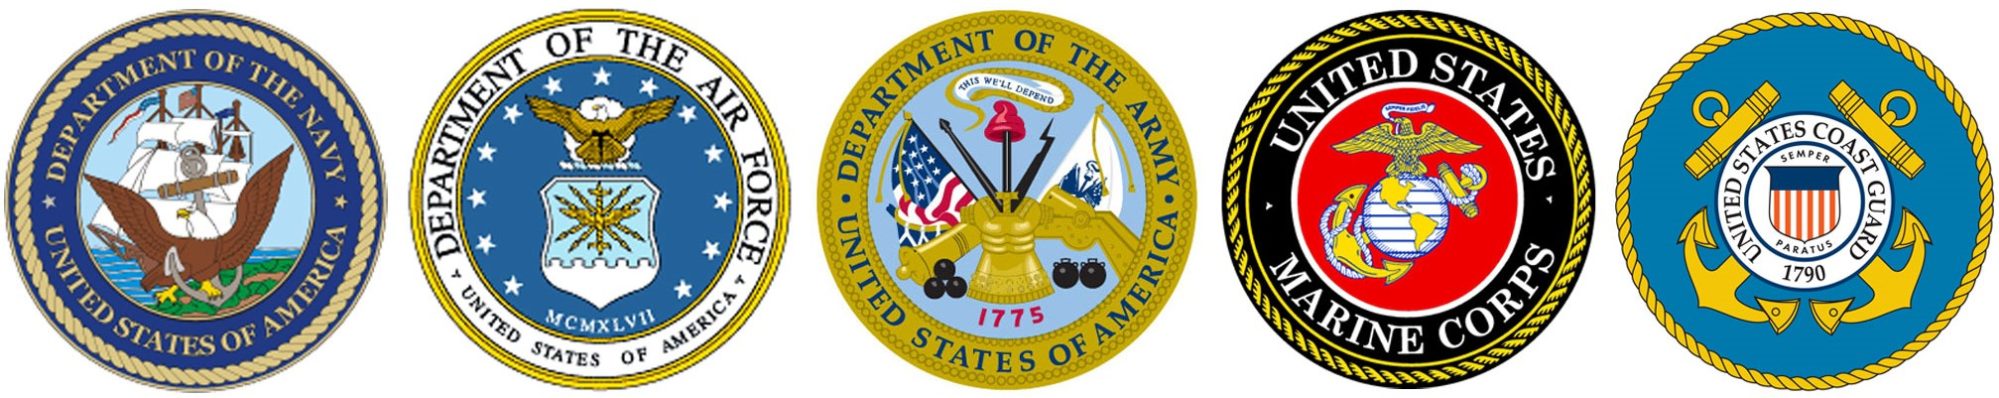 Verizon Victra Navy Army Marines Air Force Confurns Air Force Conforce για τα ασύρματα σχέδια δεδομένων και προωθήσεις για βετεράνους σε ένα κατάστημα κοντά μου